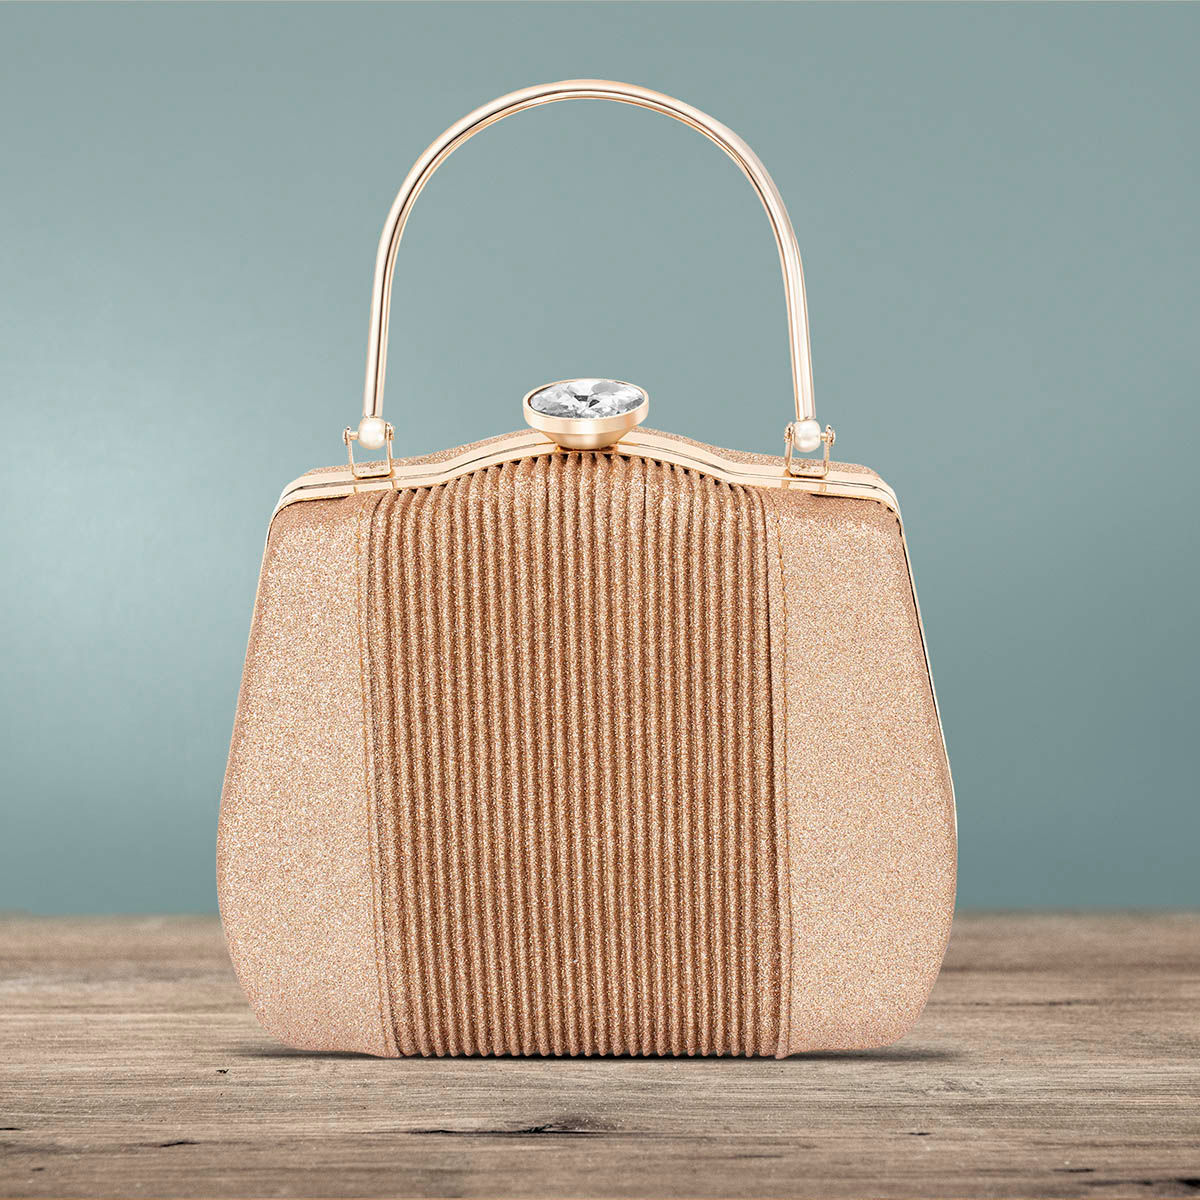 FANTASTIC VEEBEE Beautiful Bling Box Clutch Bag Purse For Bridal, Casual,  Party, Wedding (Blue) : Amazon.in: Fashion